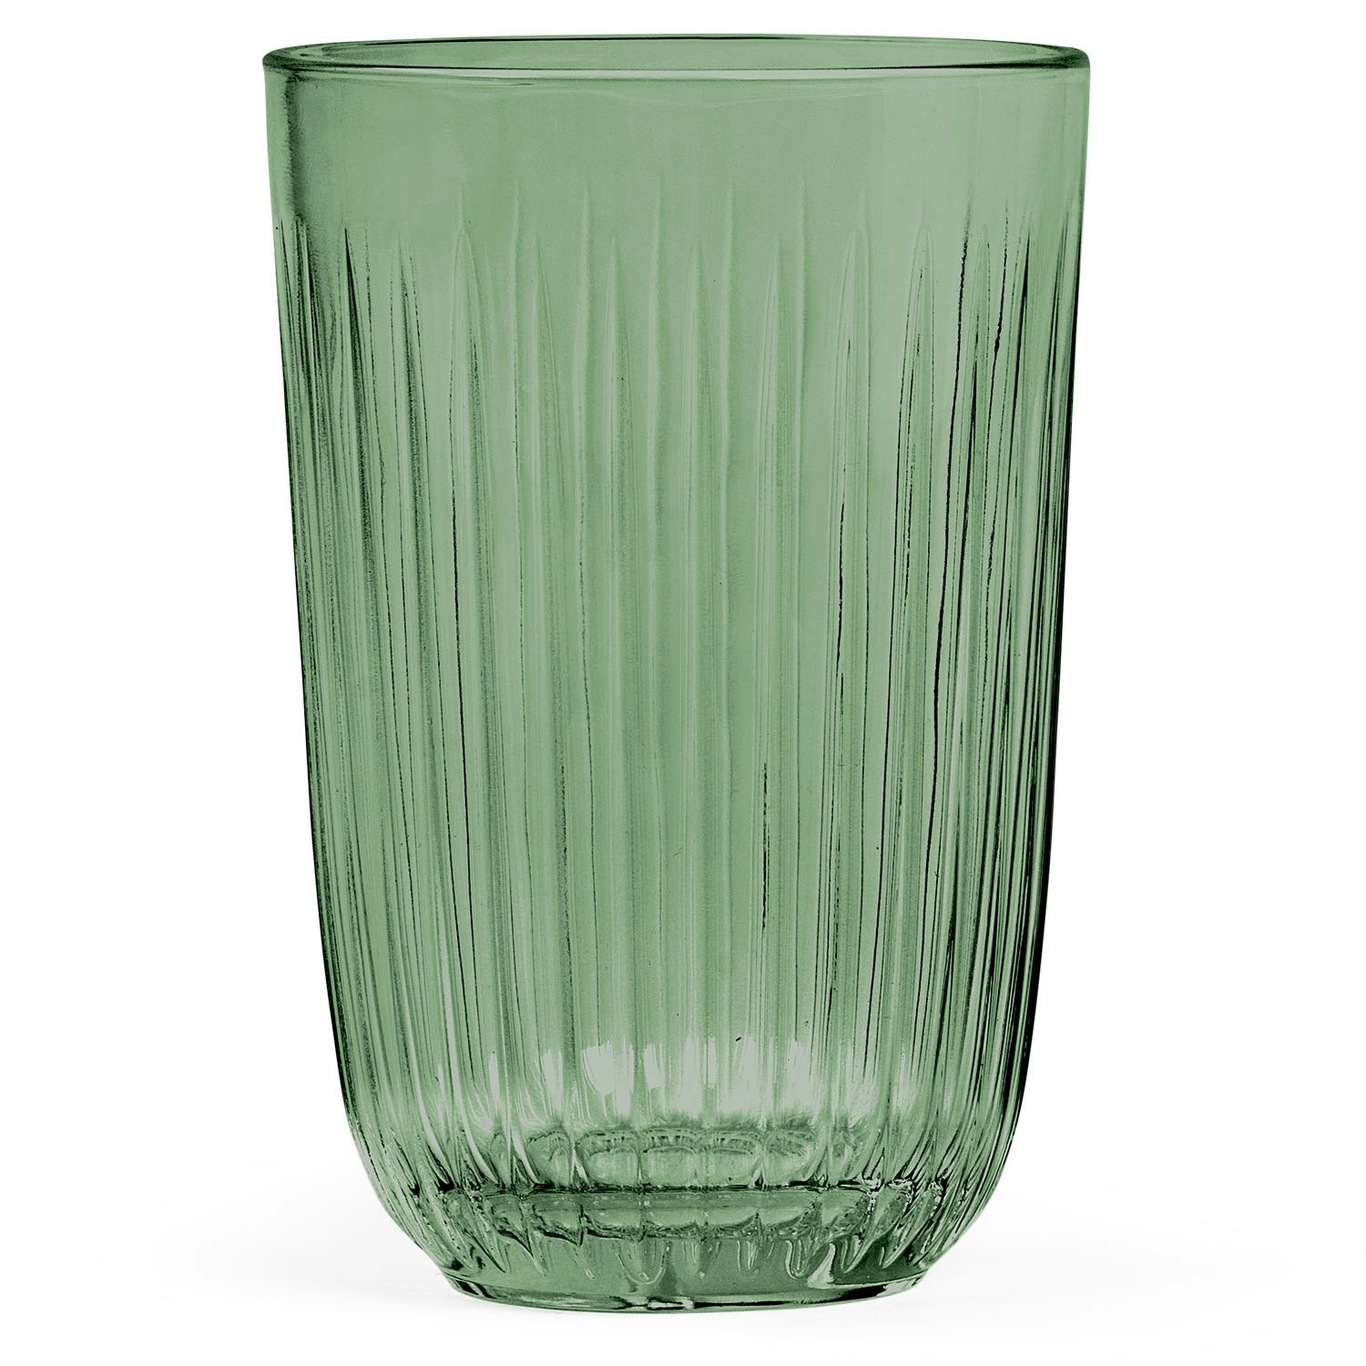 Hammershøi Drinking Glass 37 cl, 4-pack, Green